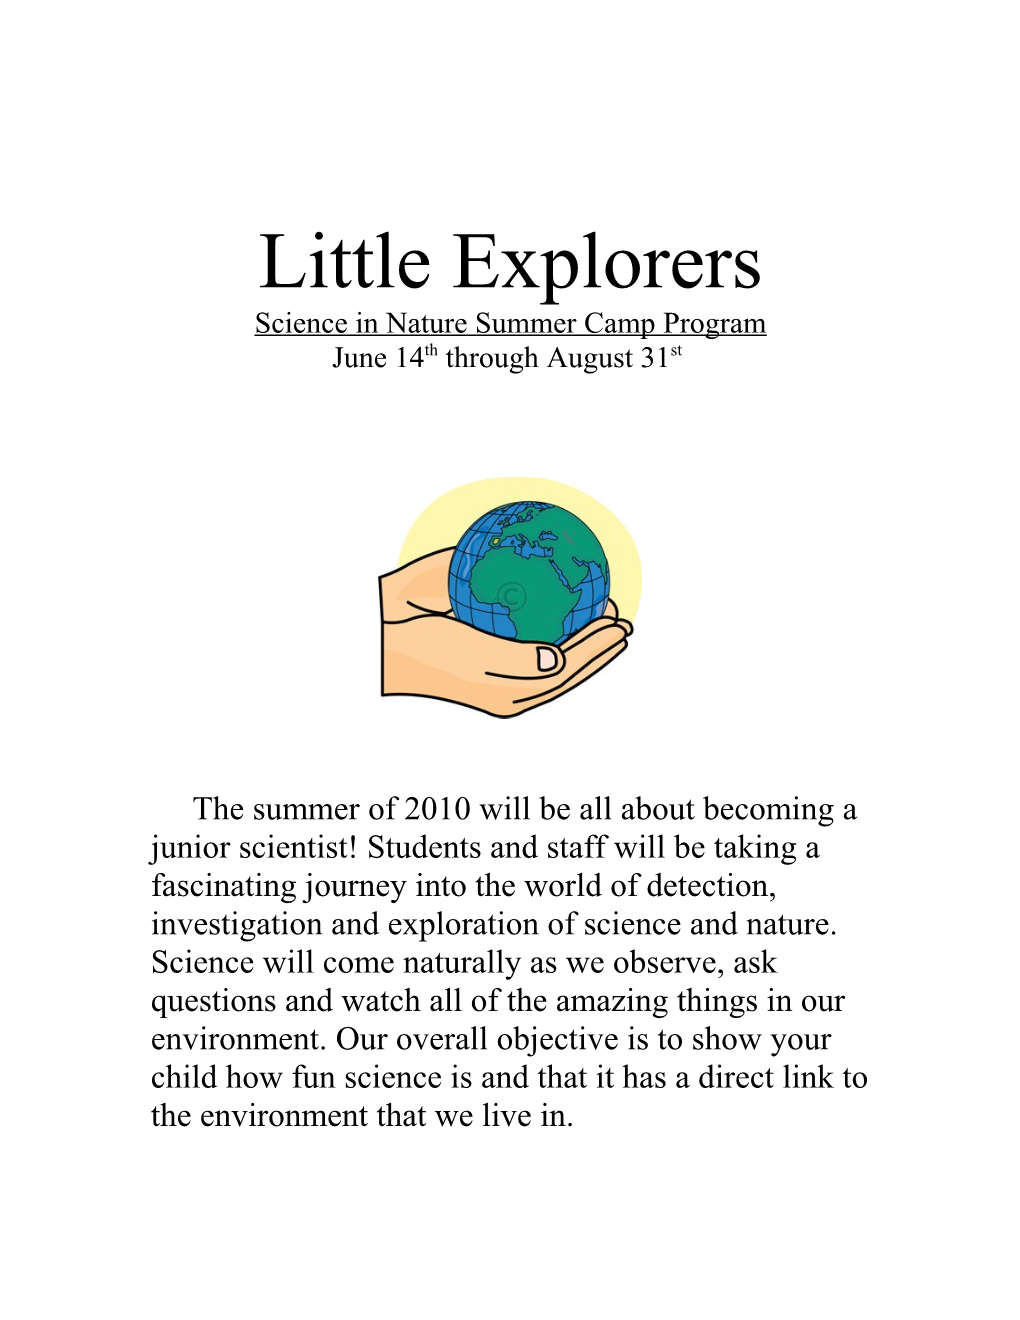 Sciencein Nature Summer Camp Program